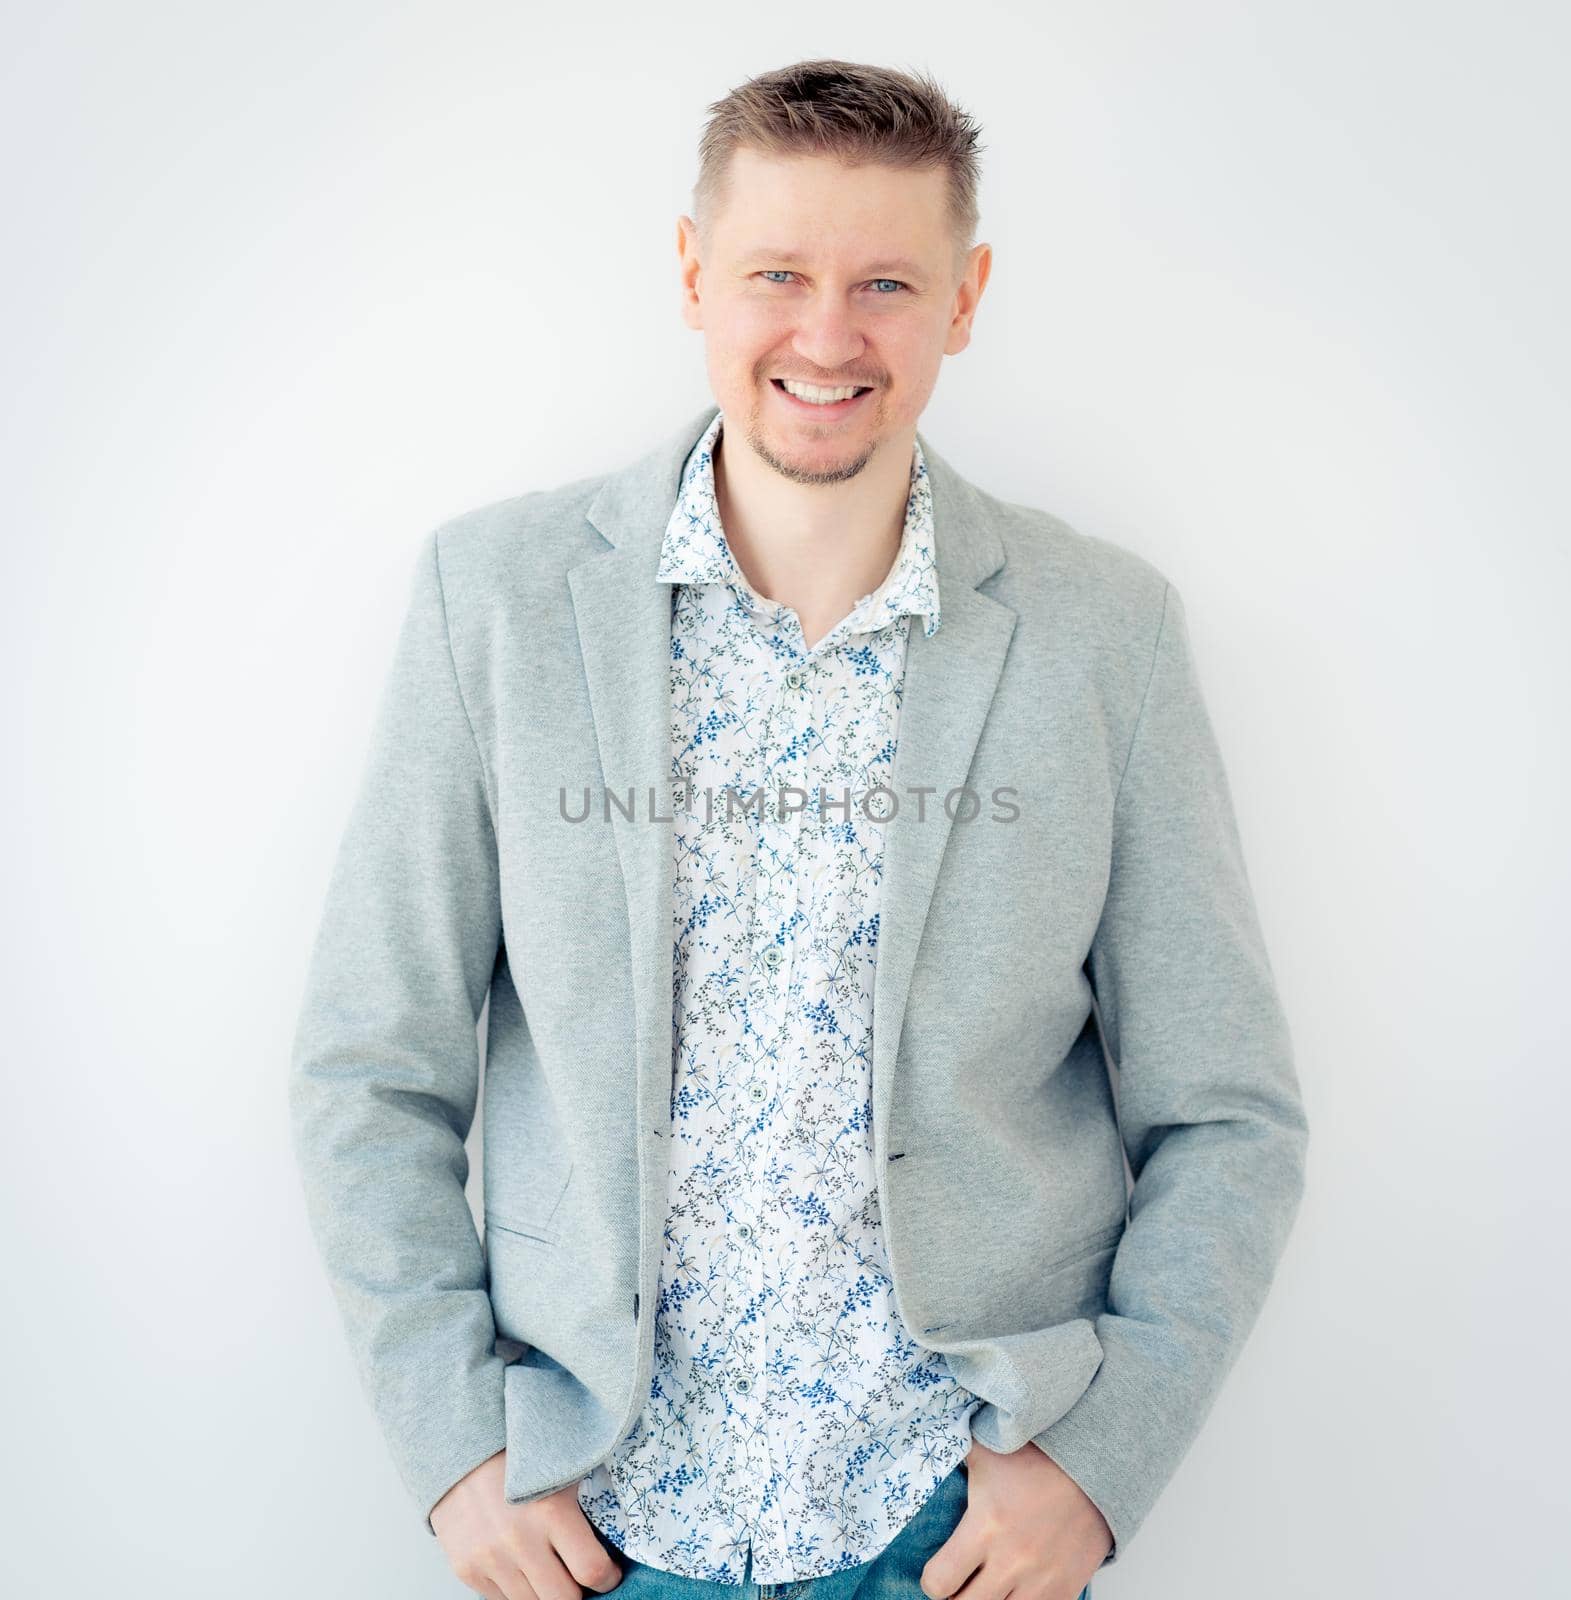 Smiling guy in shirt and jacket by GekaSkr